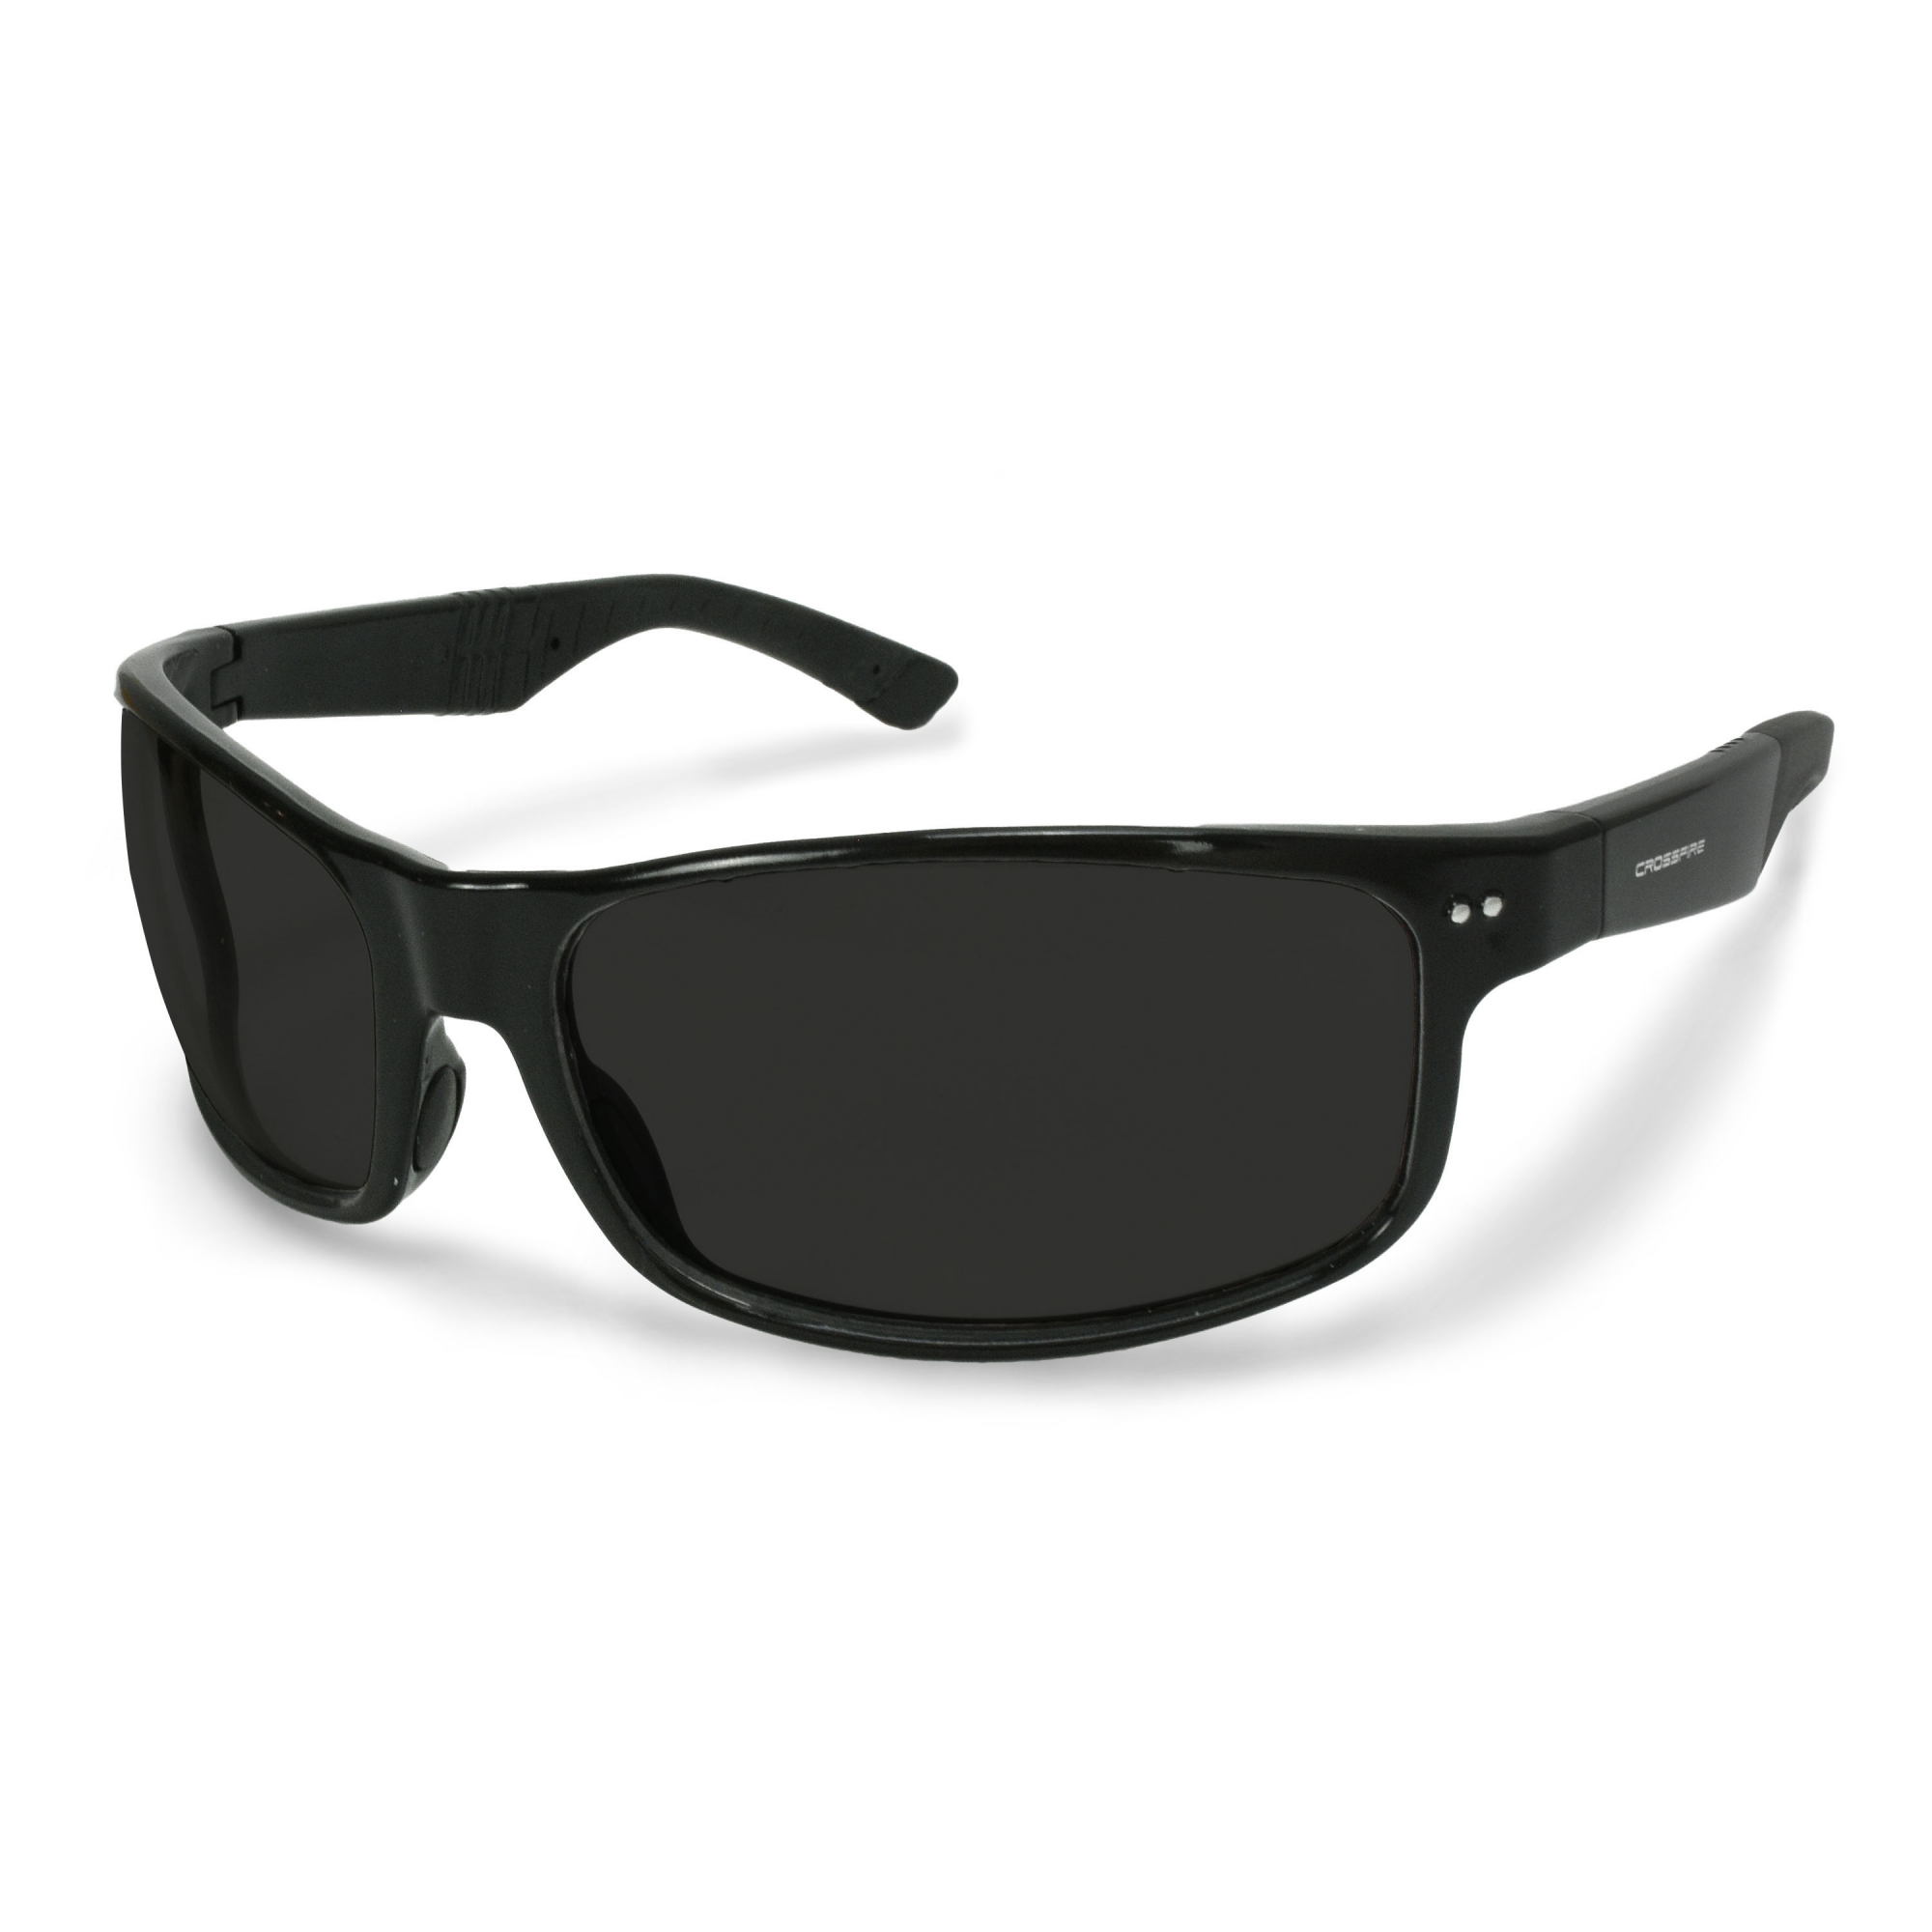 Crossfire 460601 CK7 Safety Glasses - Shiny Black Frame - Smoke Lens